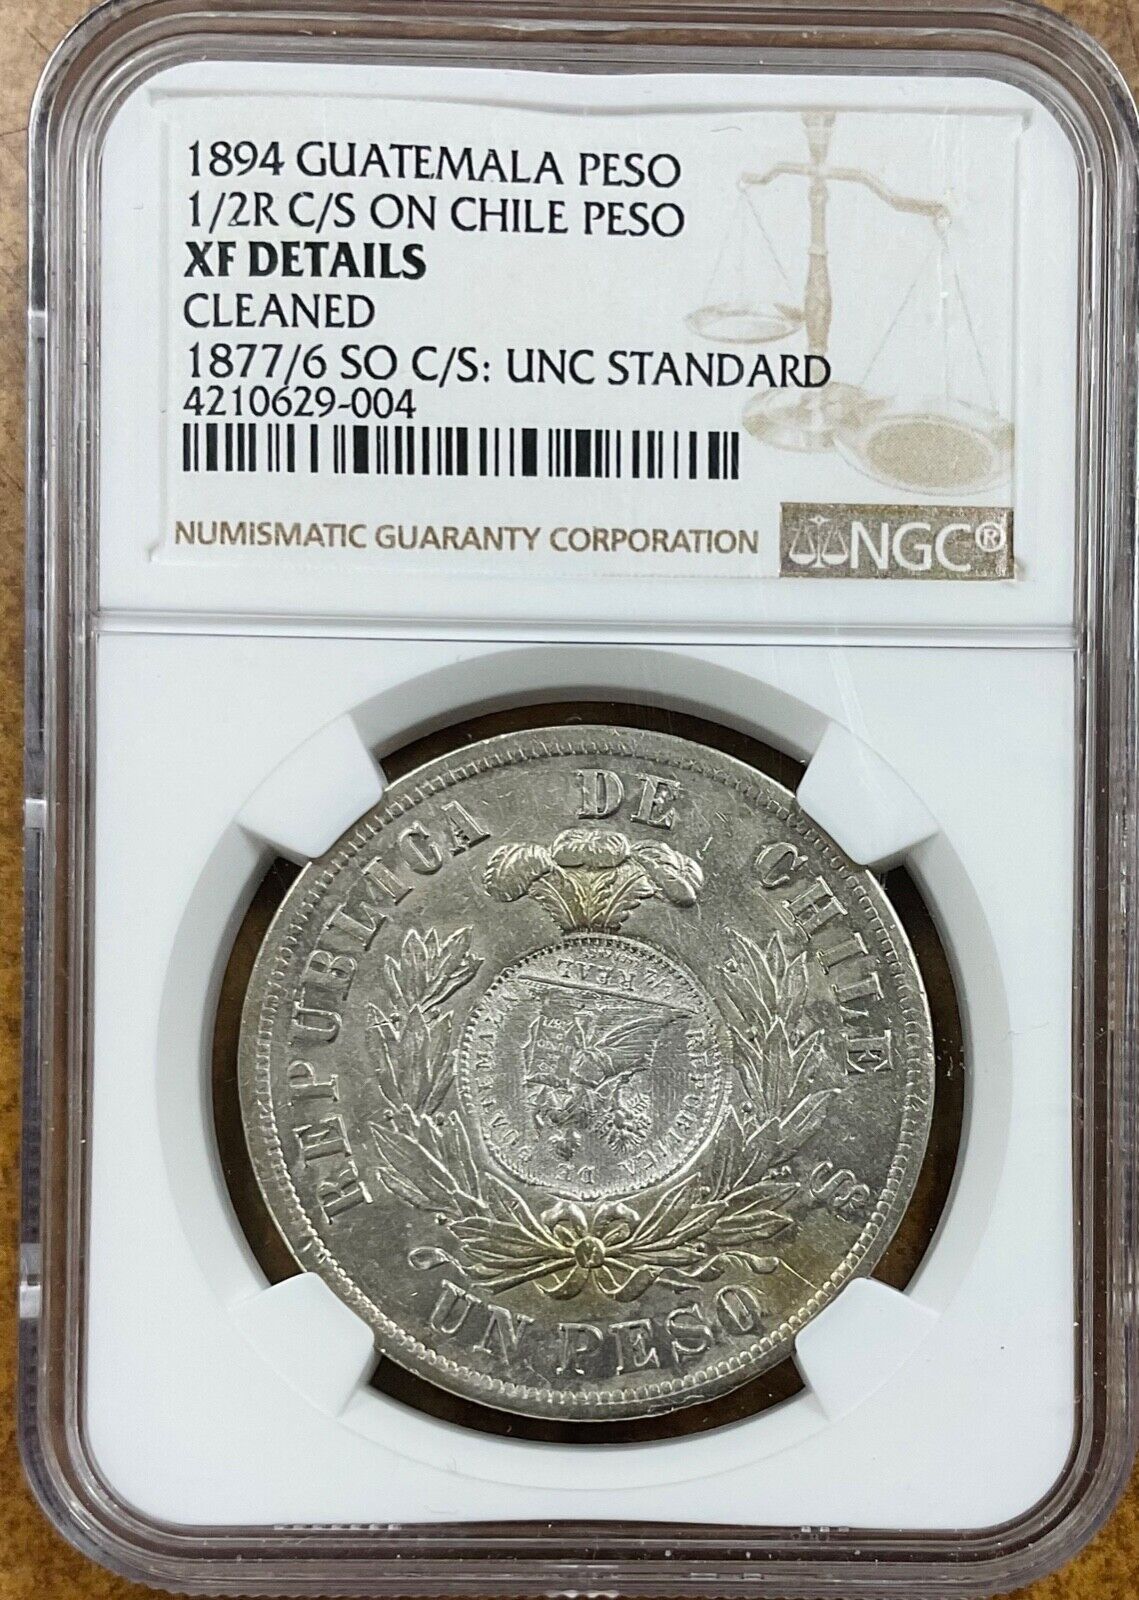 Guatemala 1894 Peso 1/2r C/s On 1877/6 Chile Peso Ngc Xf Details Unc Standard